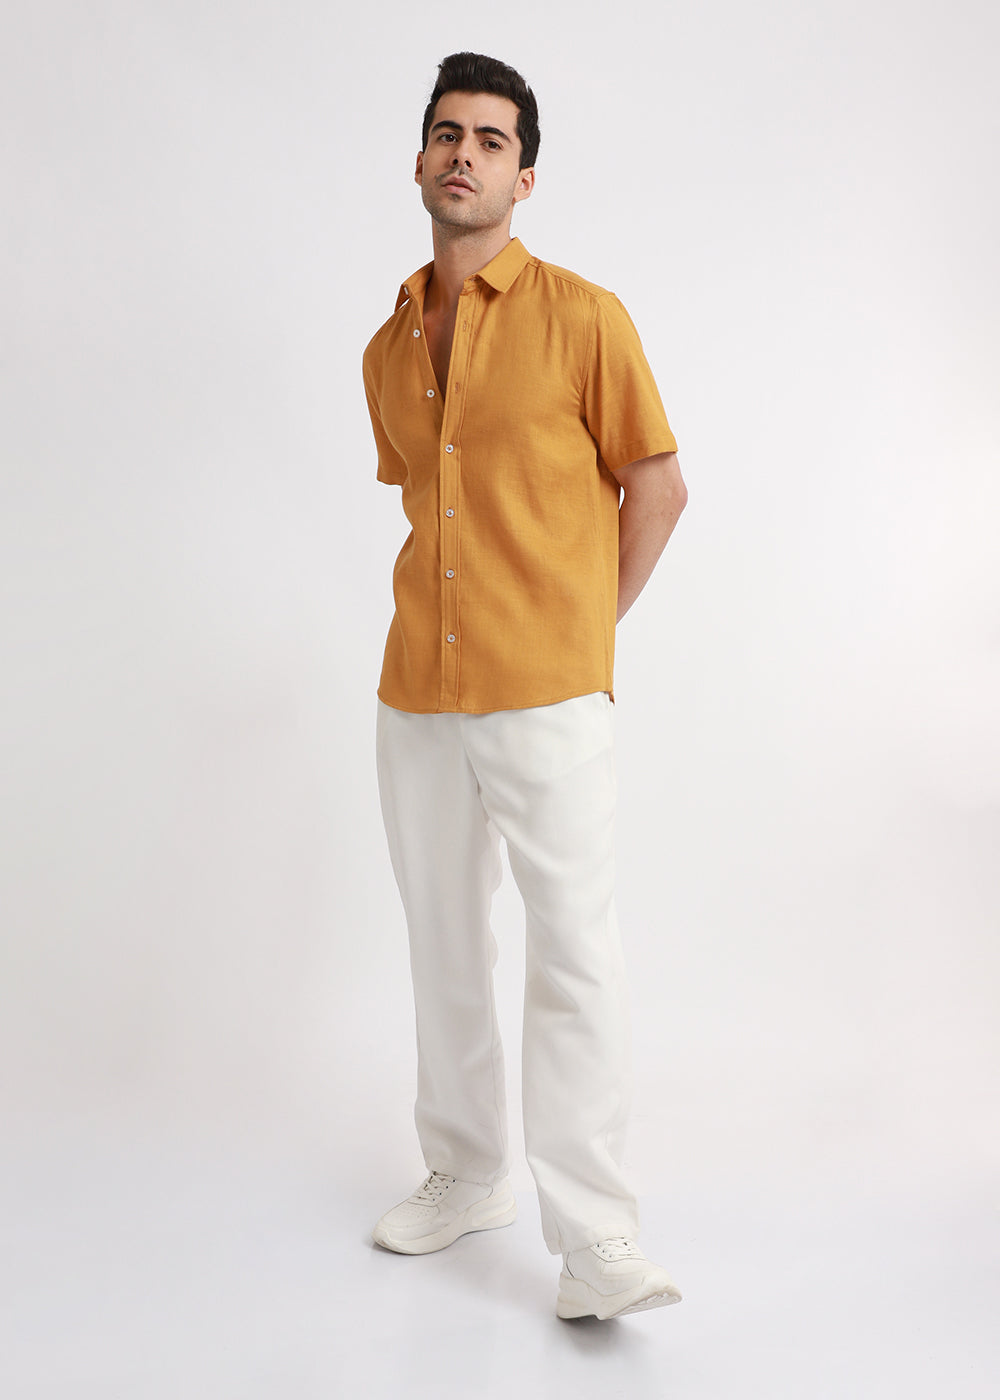 Batiste Gold Orange Linen shirt